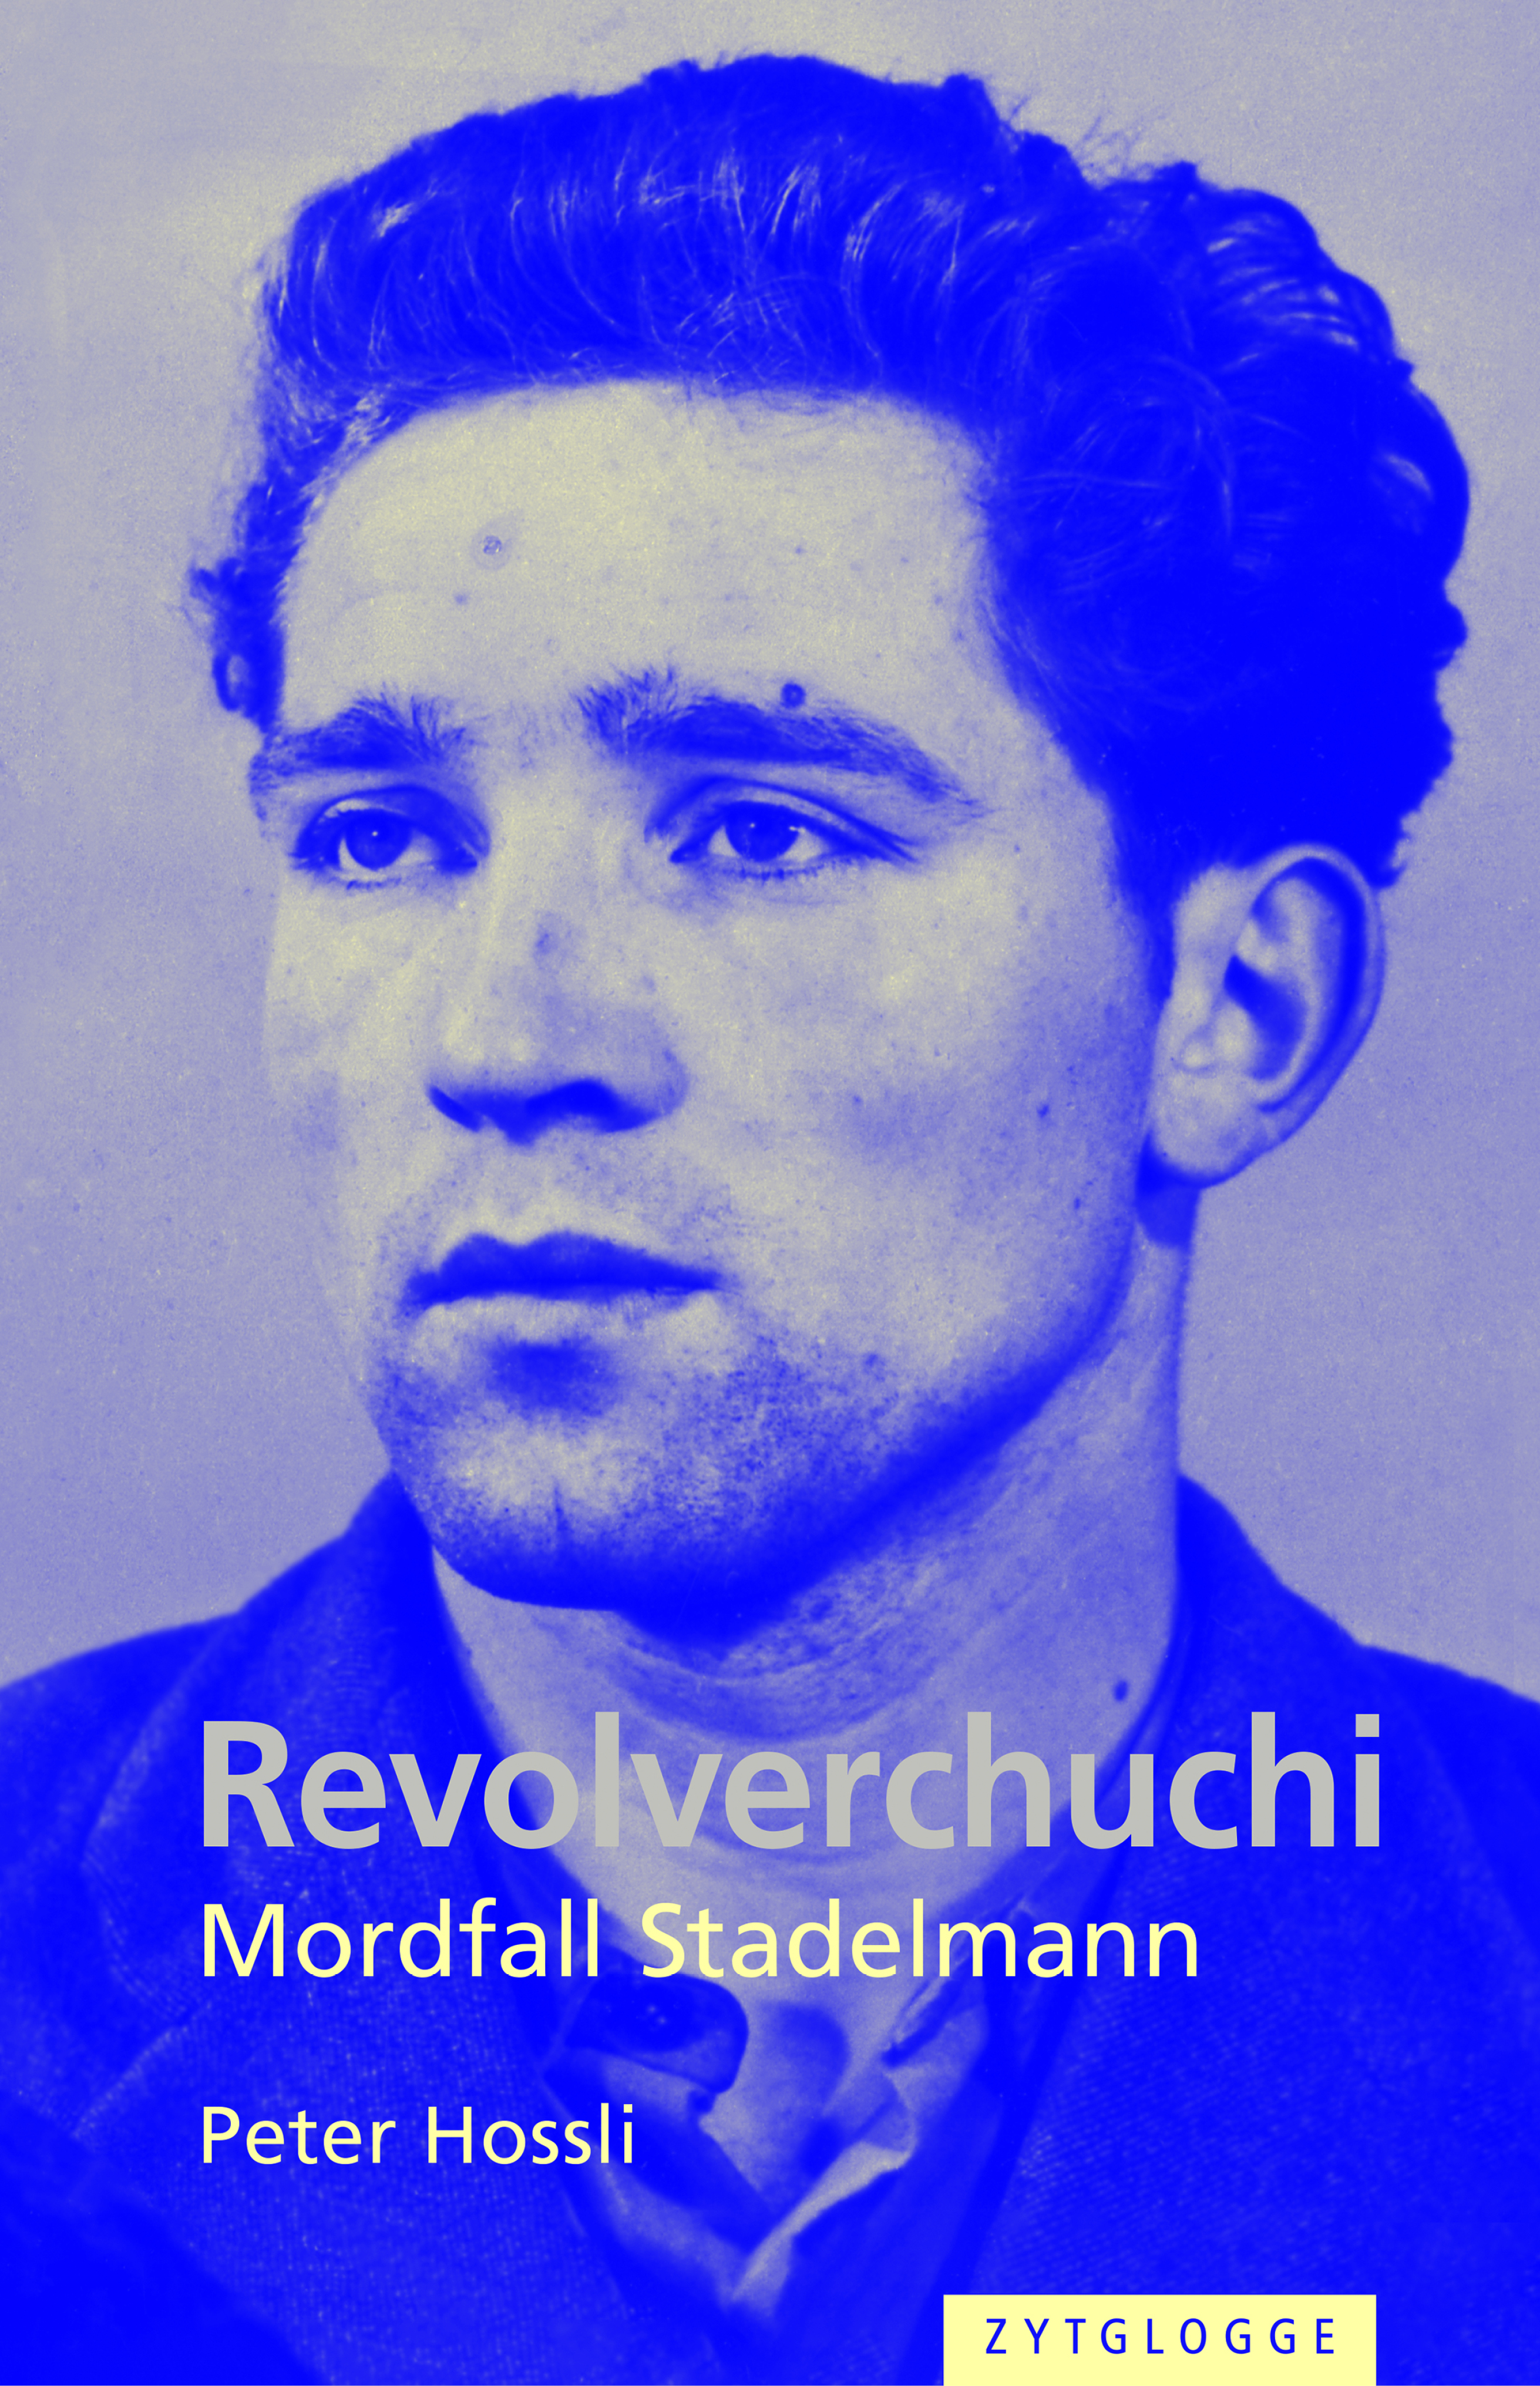 "Revolverchuchi"